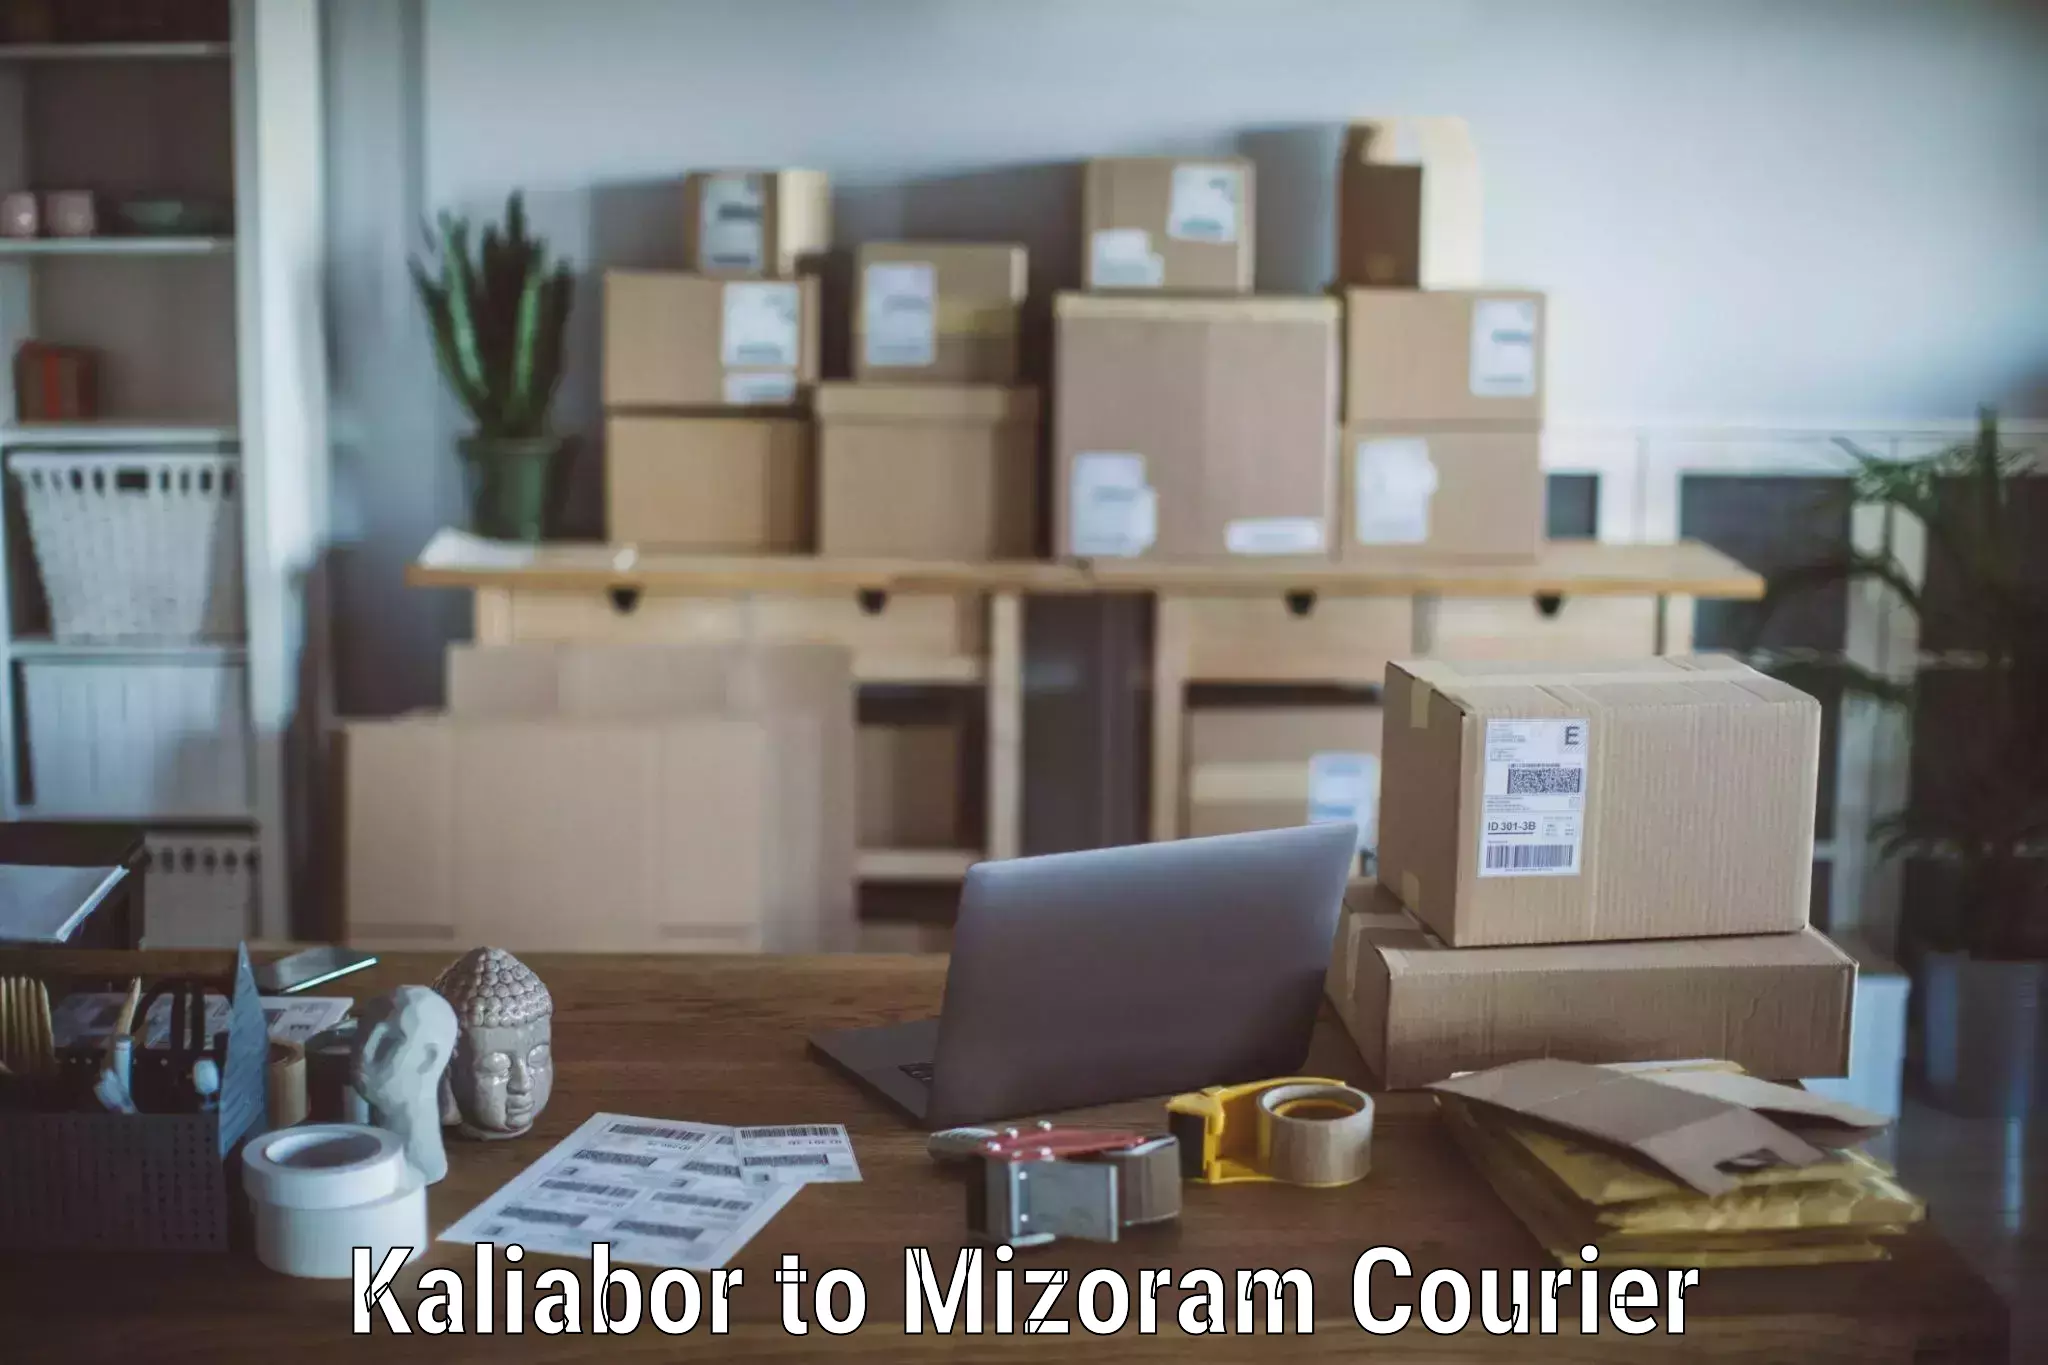 Professional moving company Kaliabor to Mizoram